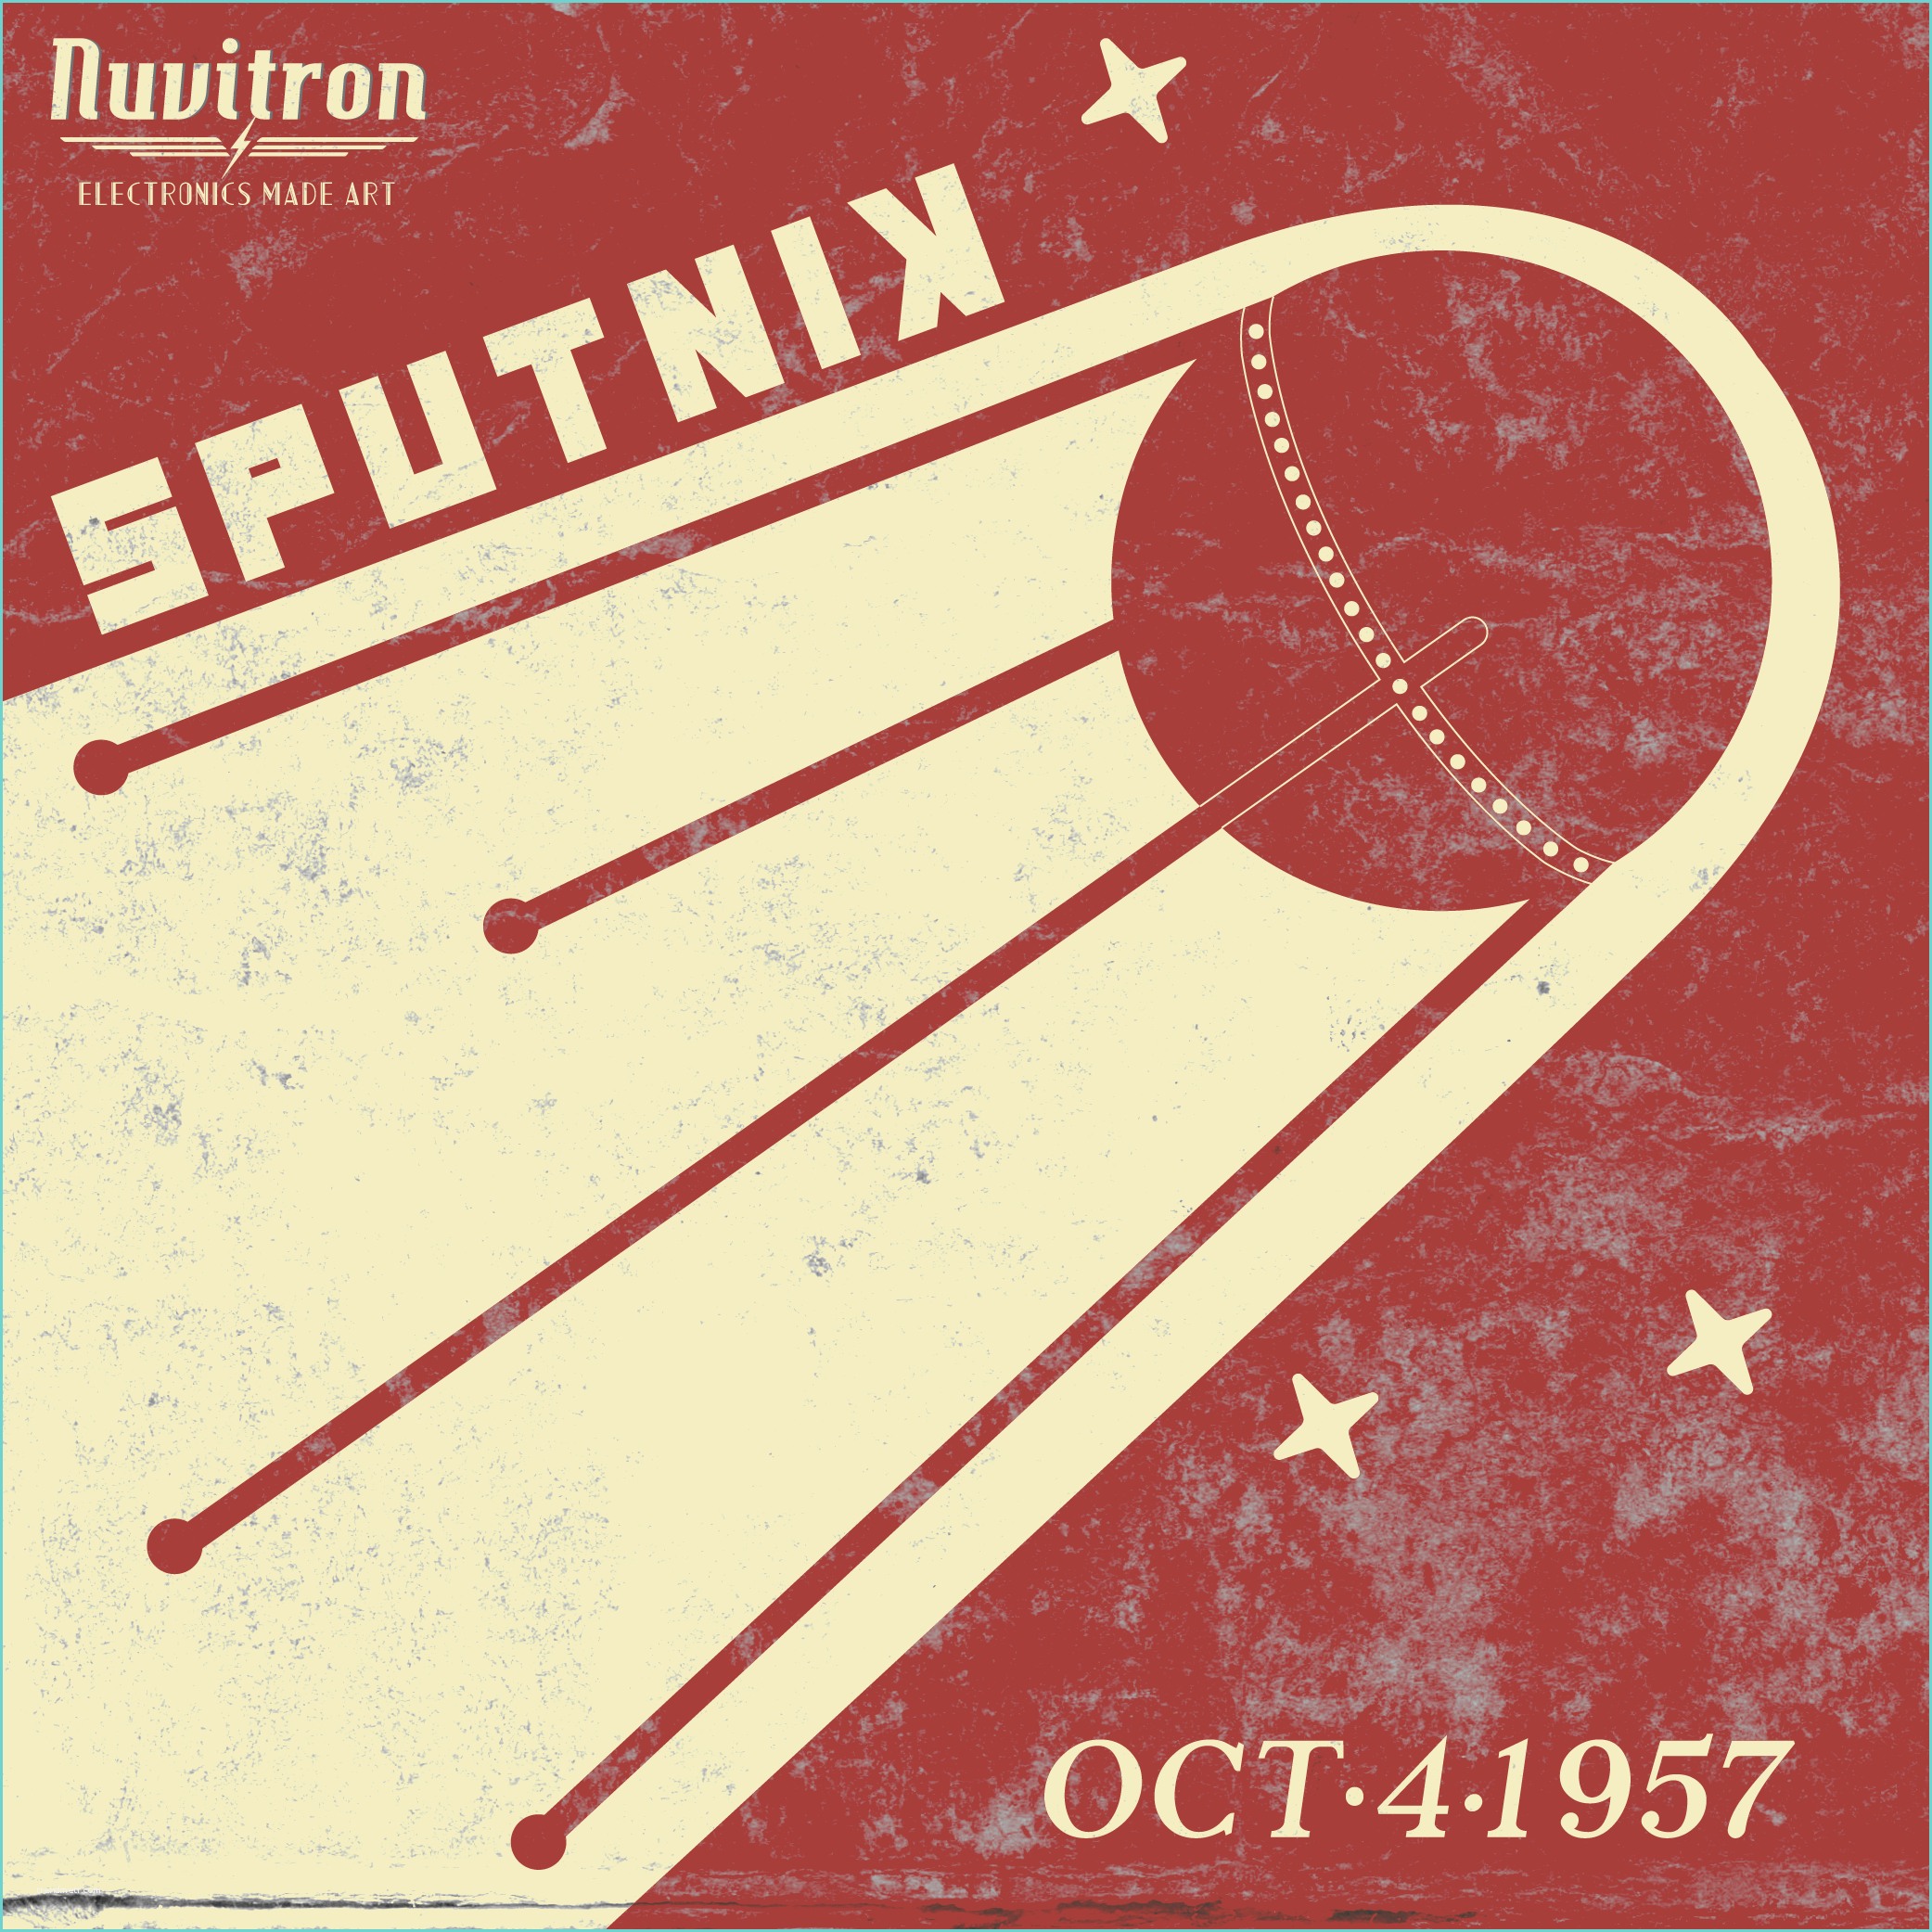 Allposters Return Policy Sputnik 1 Celebrating 60 Years Of Spaceflight the Space Race Began